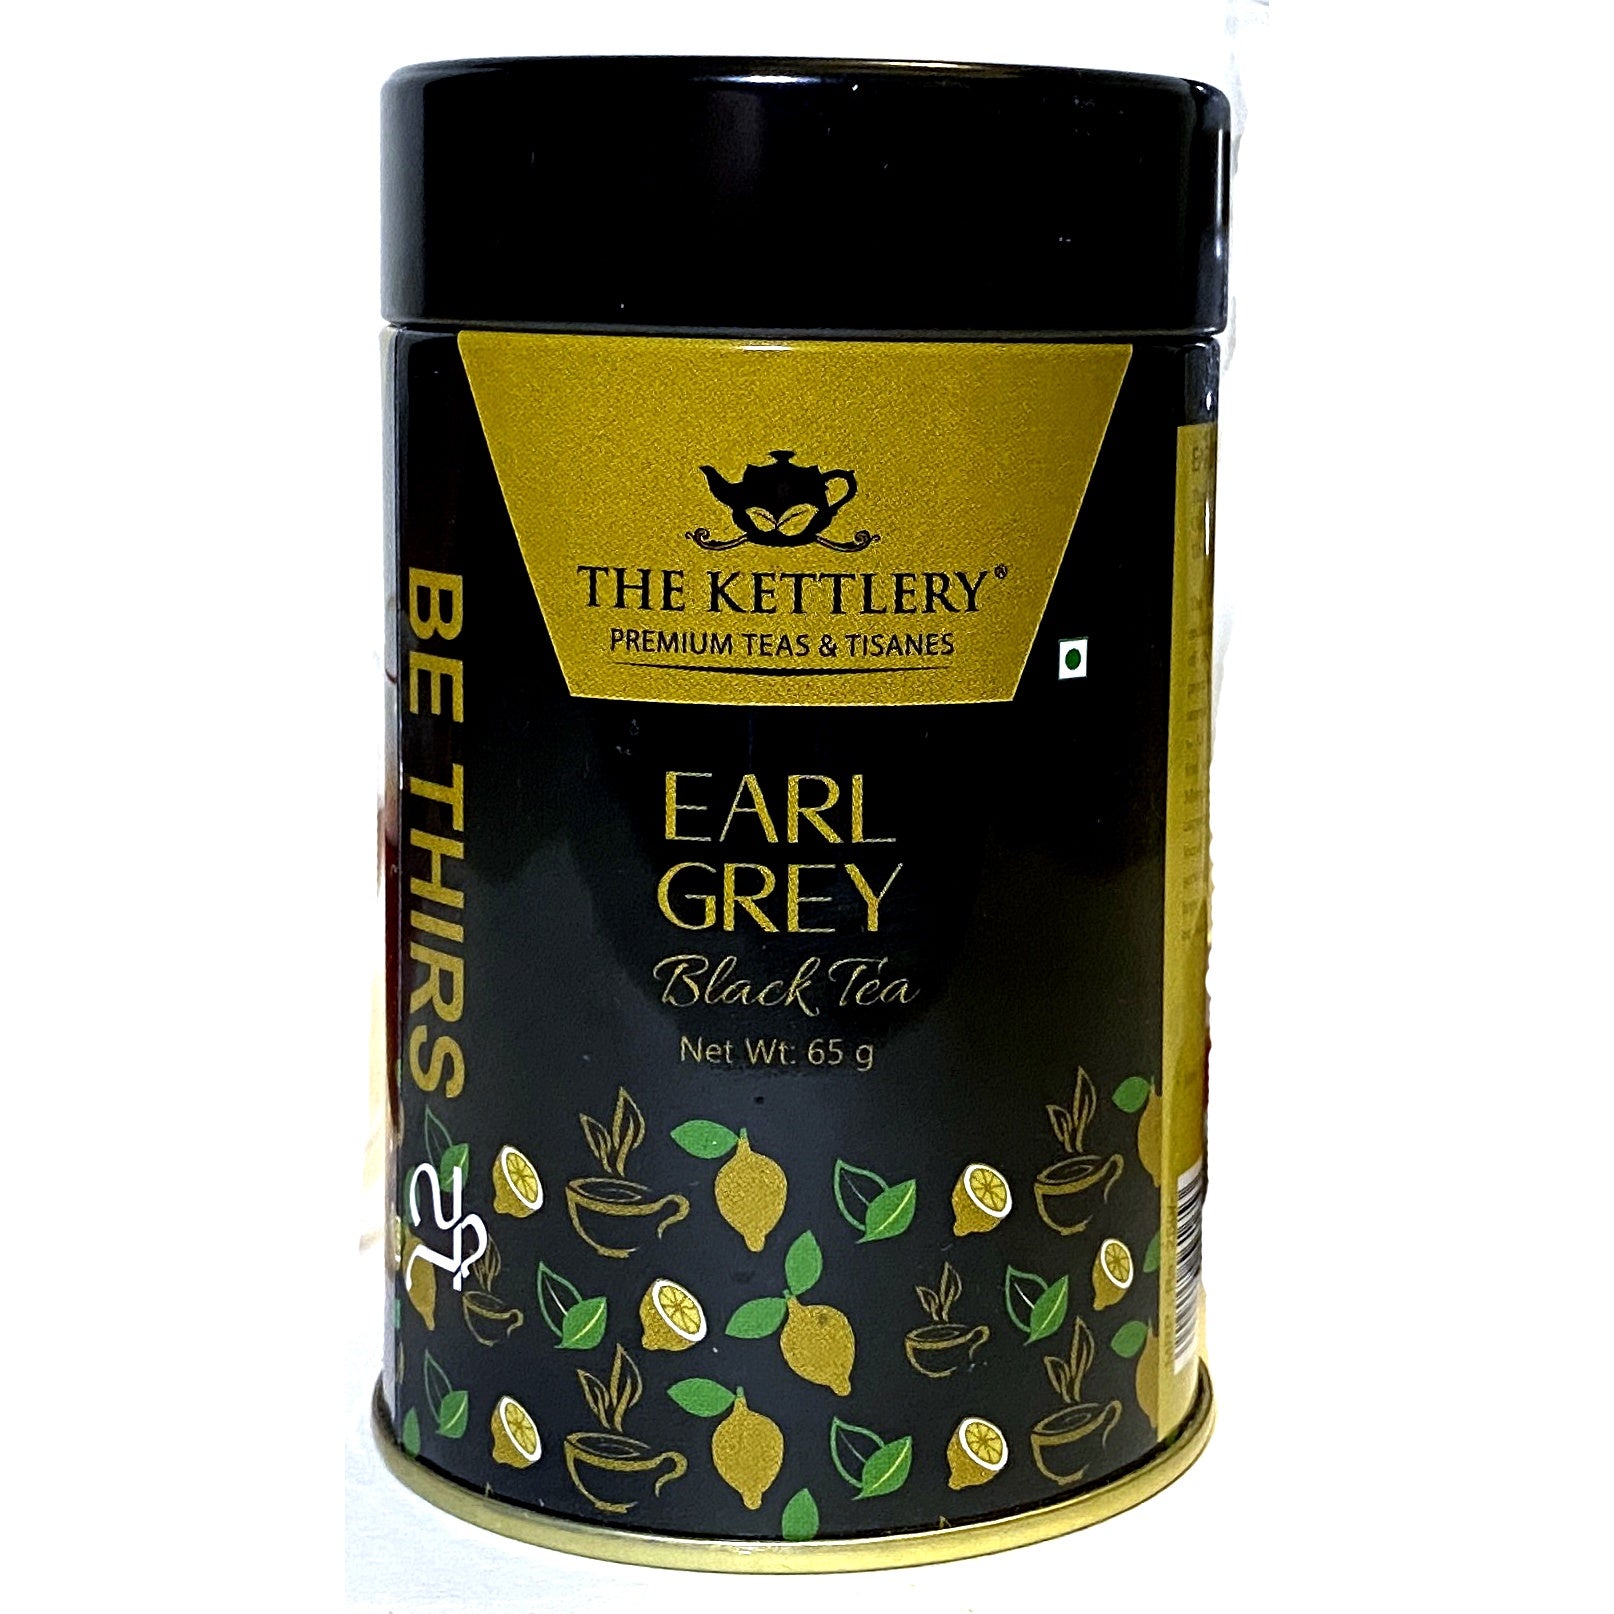 The Kettlery Earl Grey Loose Leaf Black Tea Tin, 65 g